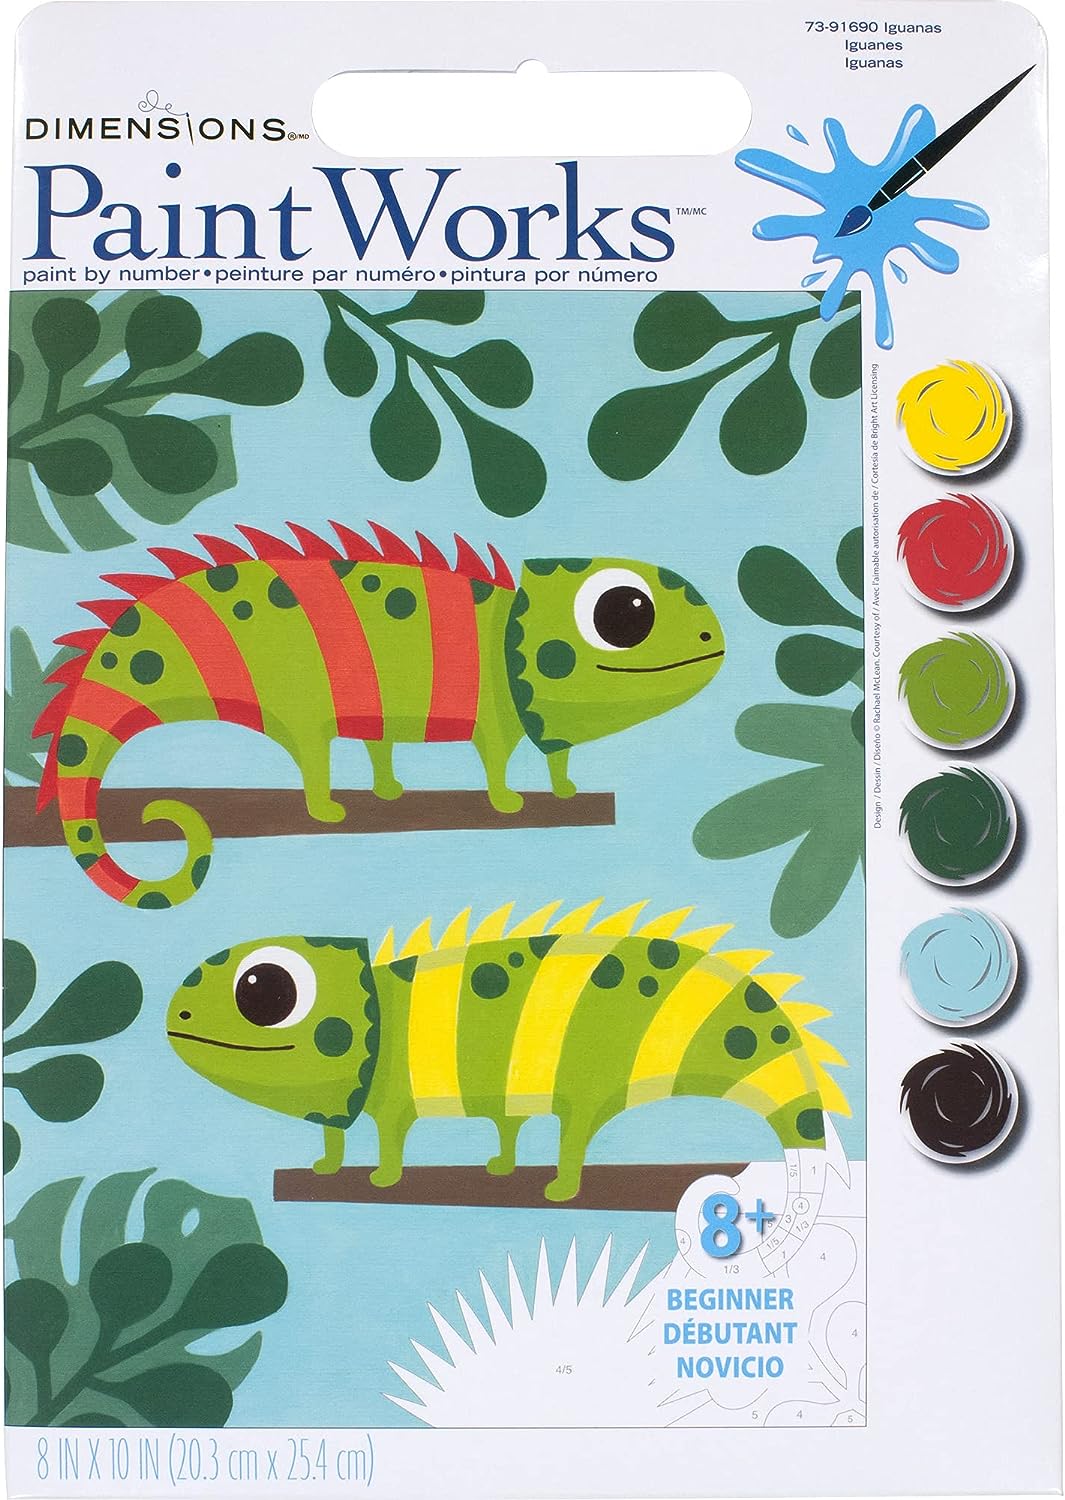 Paint Works - Iguanes